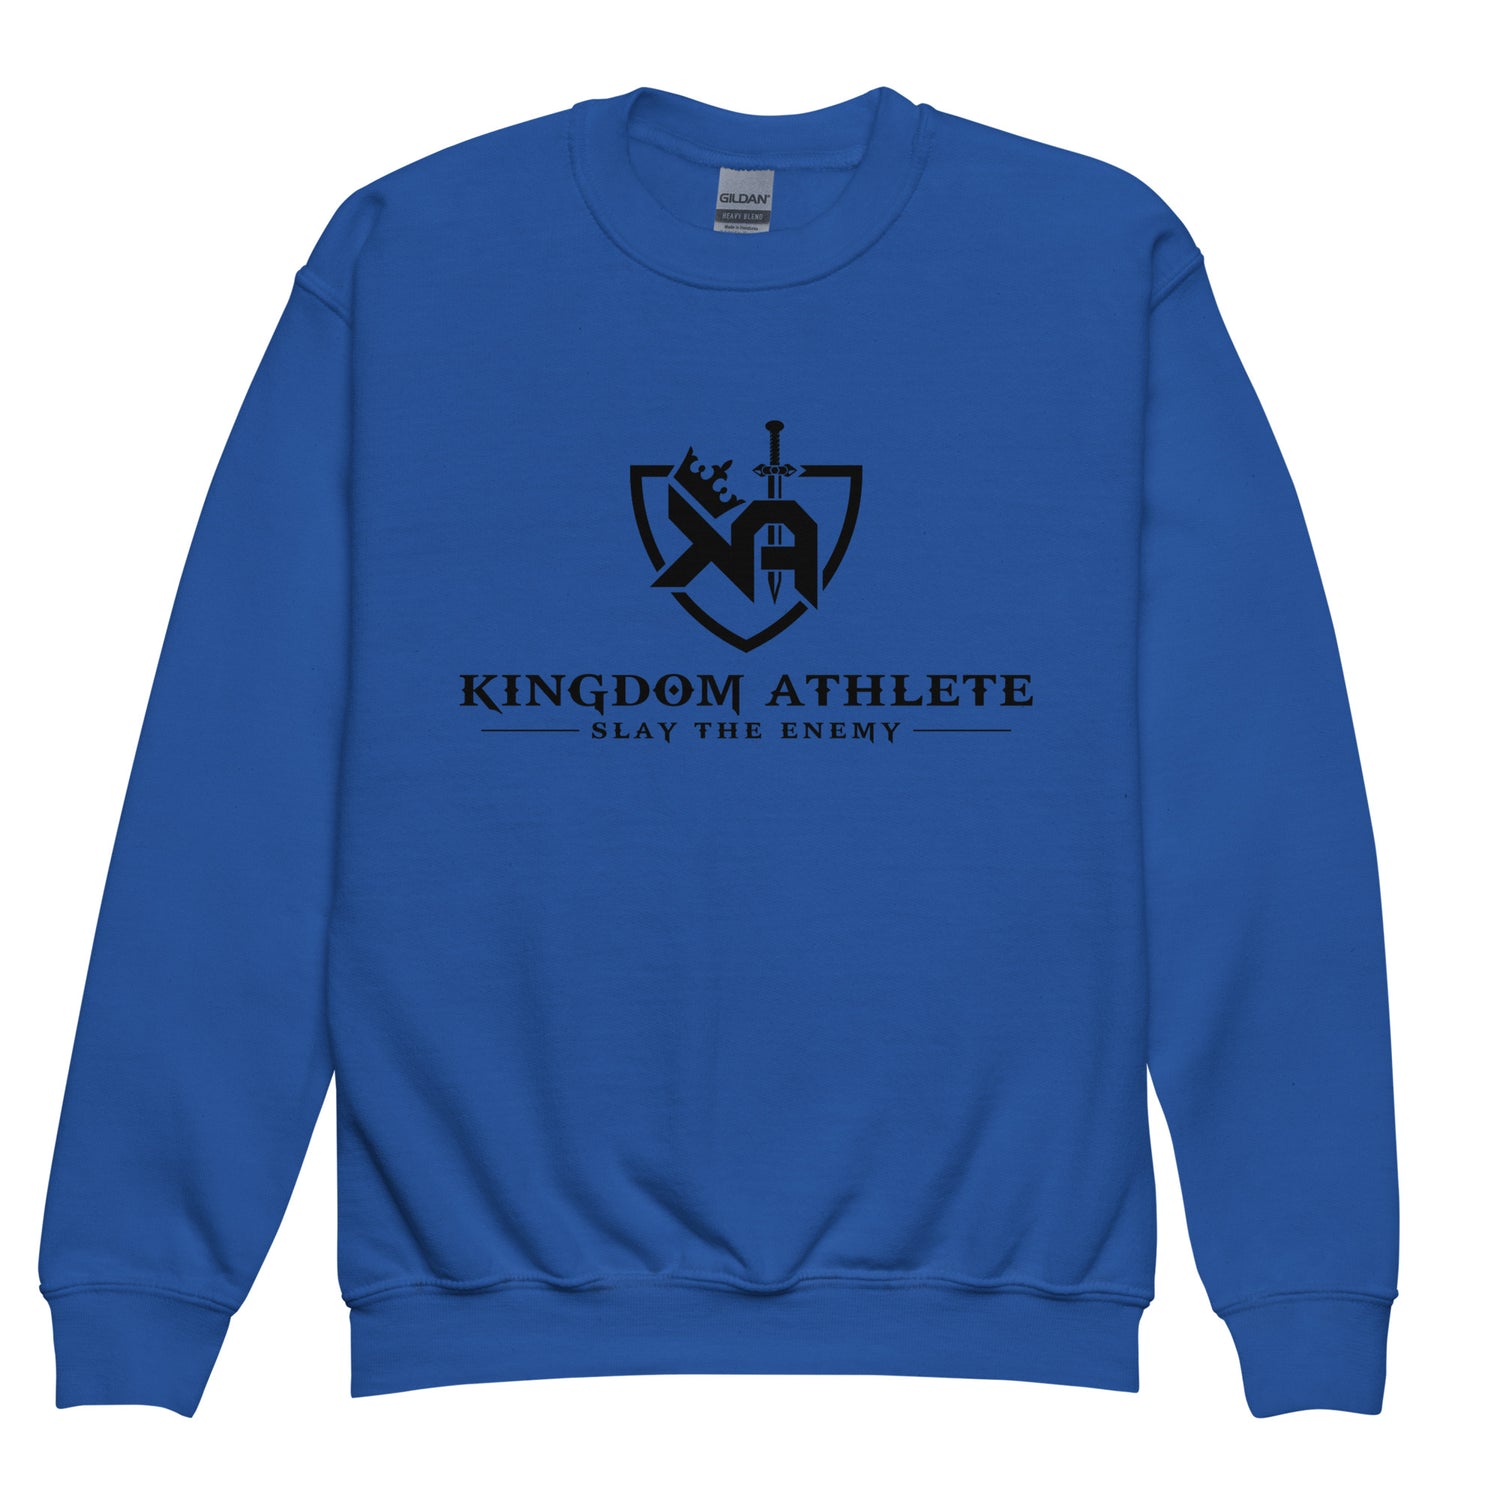 Youth crewneck sweatshirt - kingdom athlete s